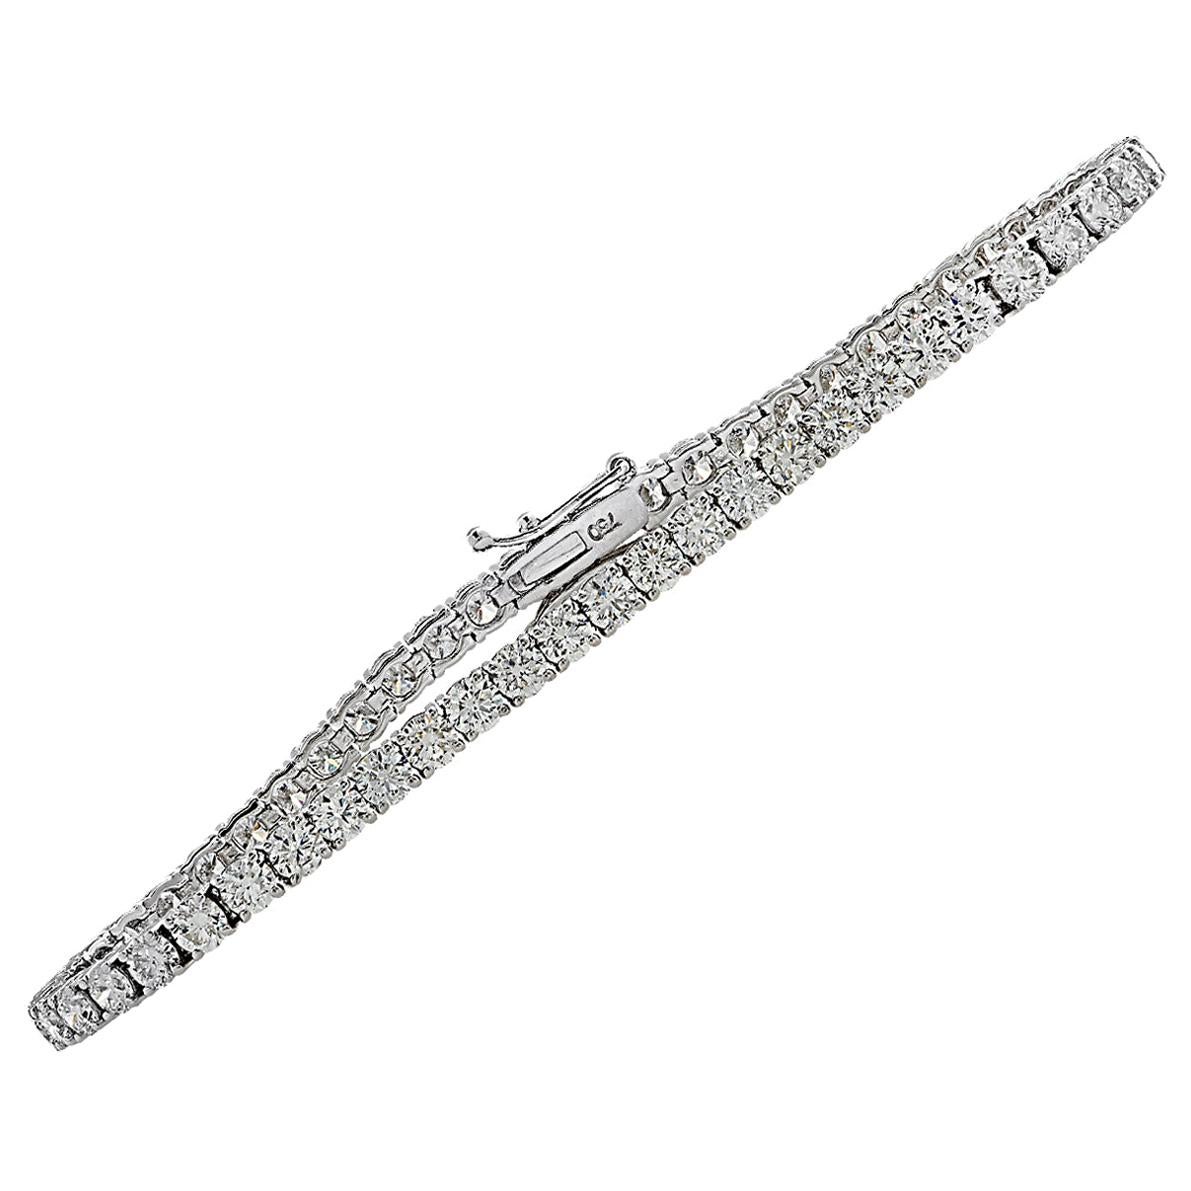 Vivid Diamonds 6.36 Carat Diamond Tennis Bracelet